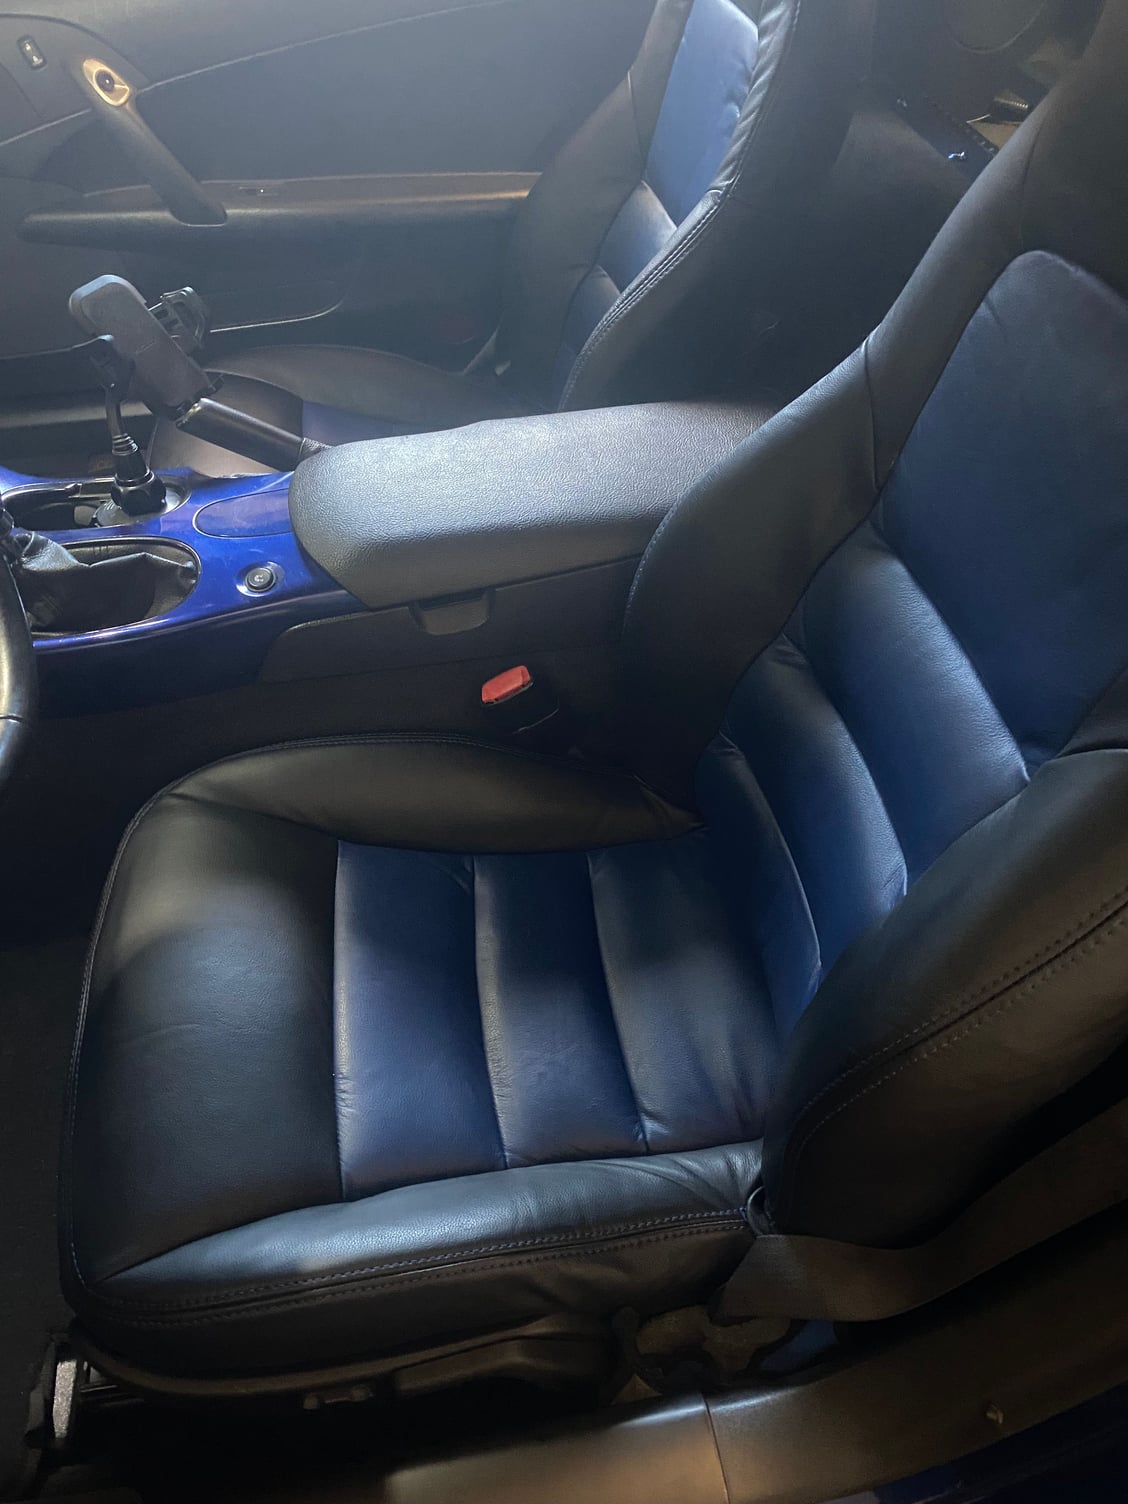 Leather seat repair kit review - CorvetteForum - Chevrolet Corvette Forum  Discussion